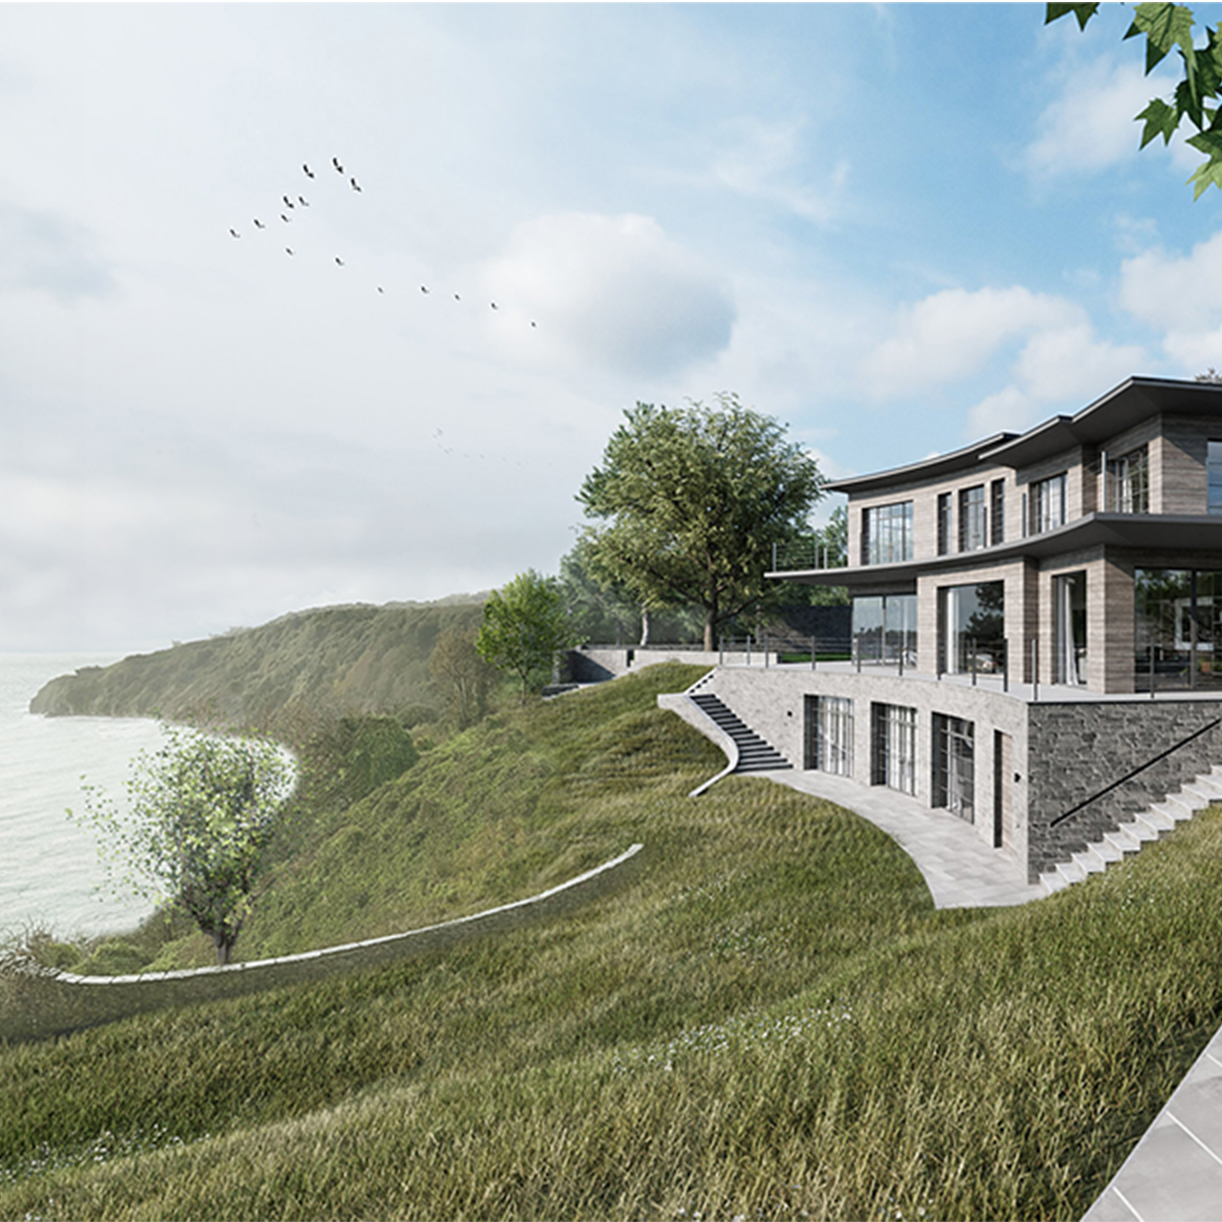 Contemporary Architecture - Coastal Living - Richmond Bell Architects, Dorset